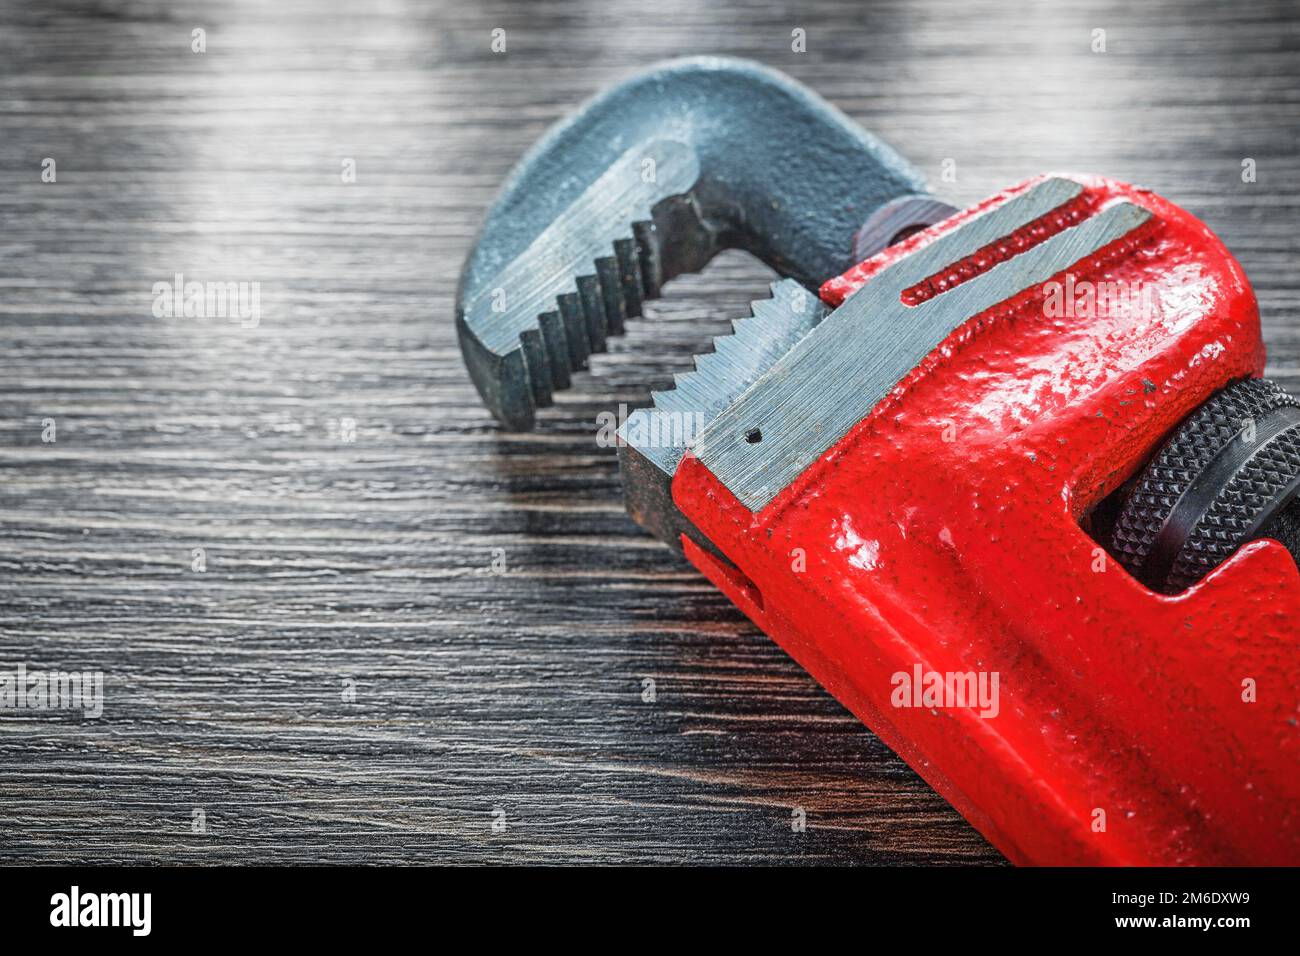 Plumbing adjustable wrench on vintage wooden board. Stock Photo